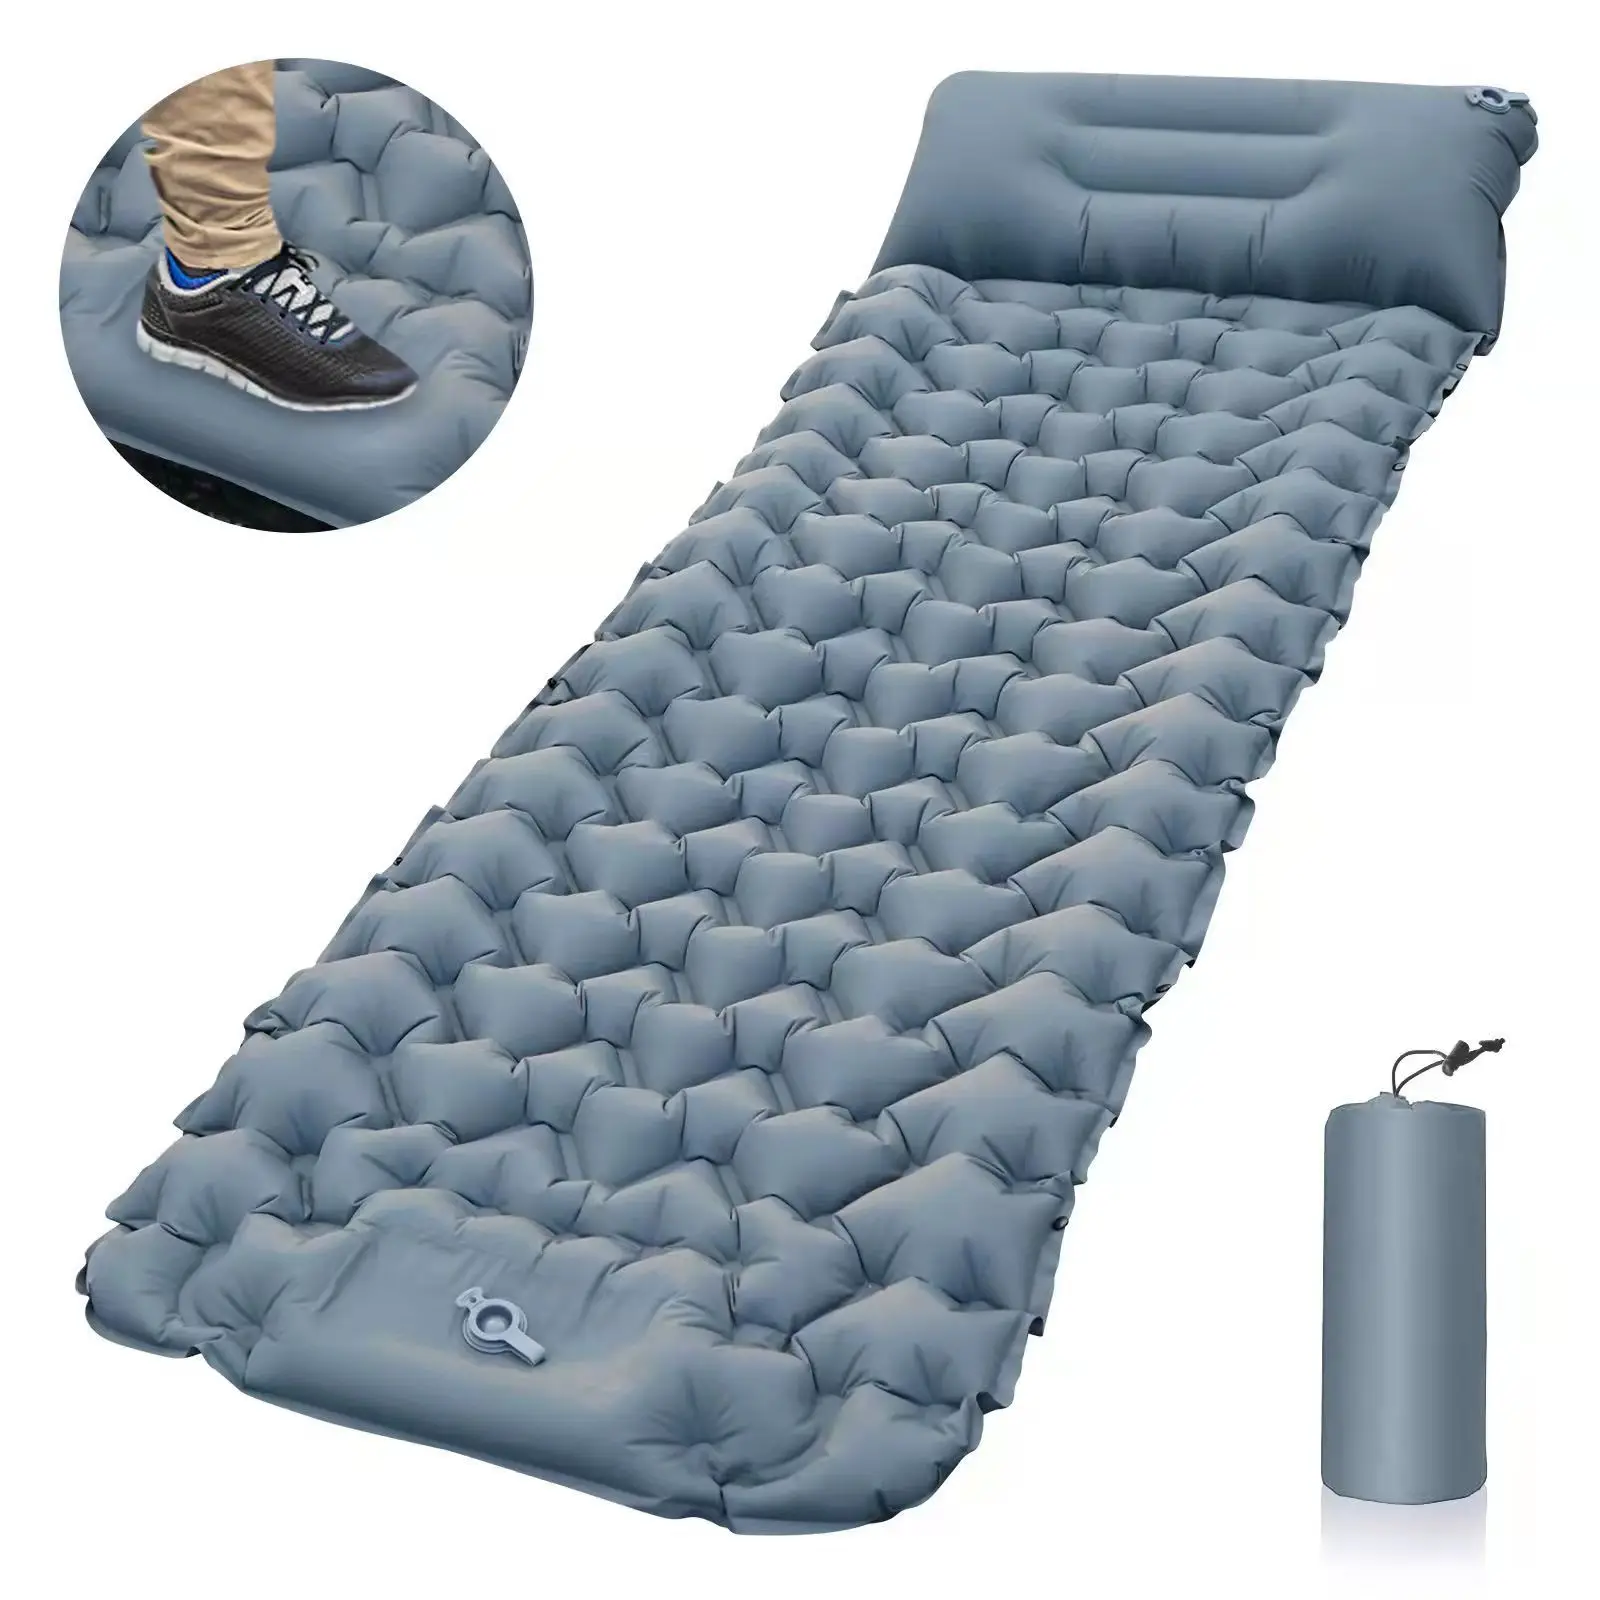 

Outdoor Sleeping Pad Camping Inflatable Mattress with Pillows Travel Mat Folding Bed Ultralight Air Cushion Hiking Trekking